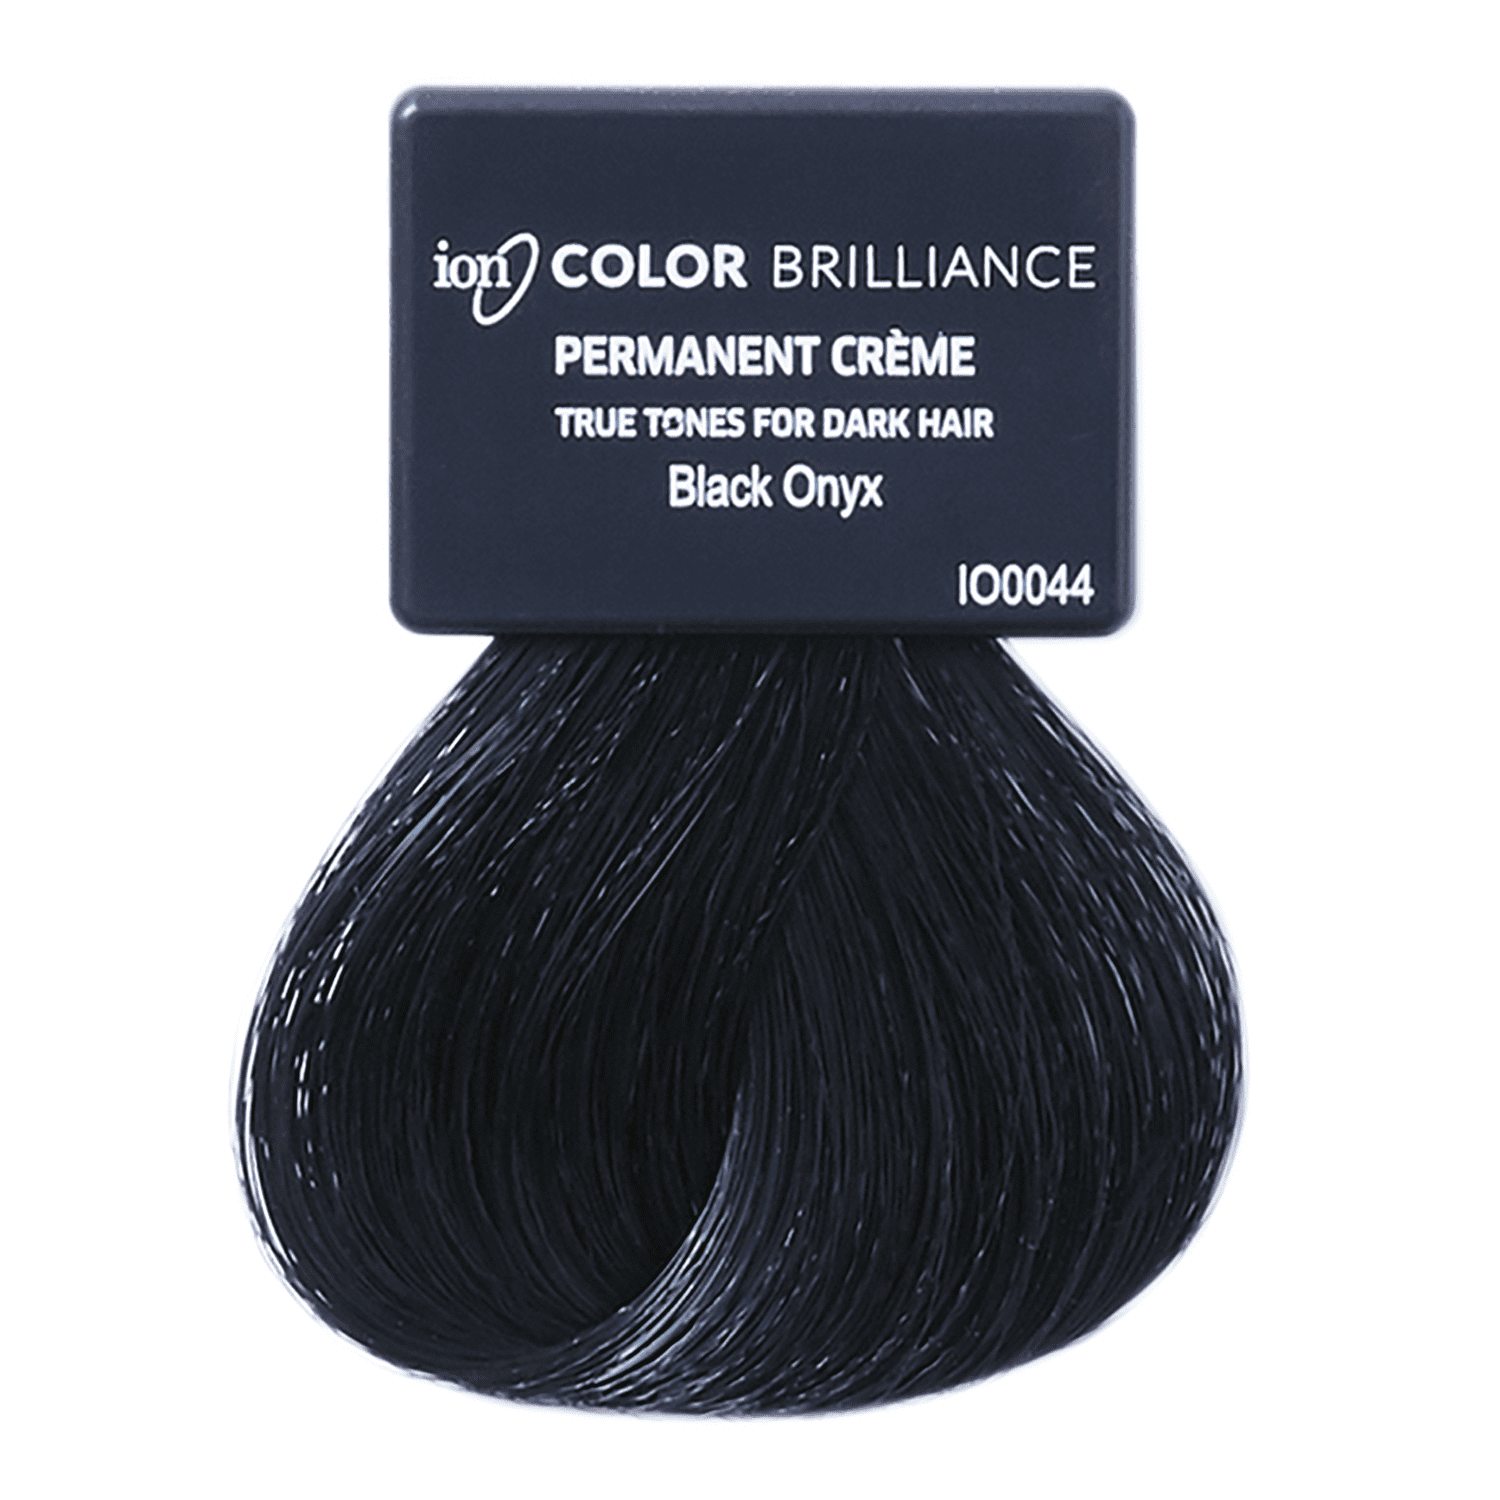 Ion True Tones for Dark Hair Permanent Crème Hair Color Black Onyx Black  Onyx 